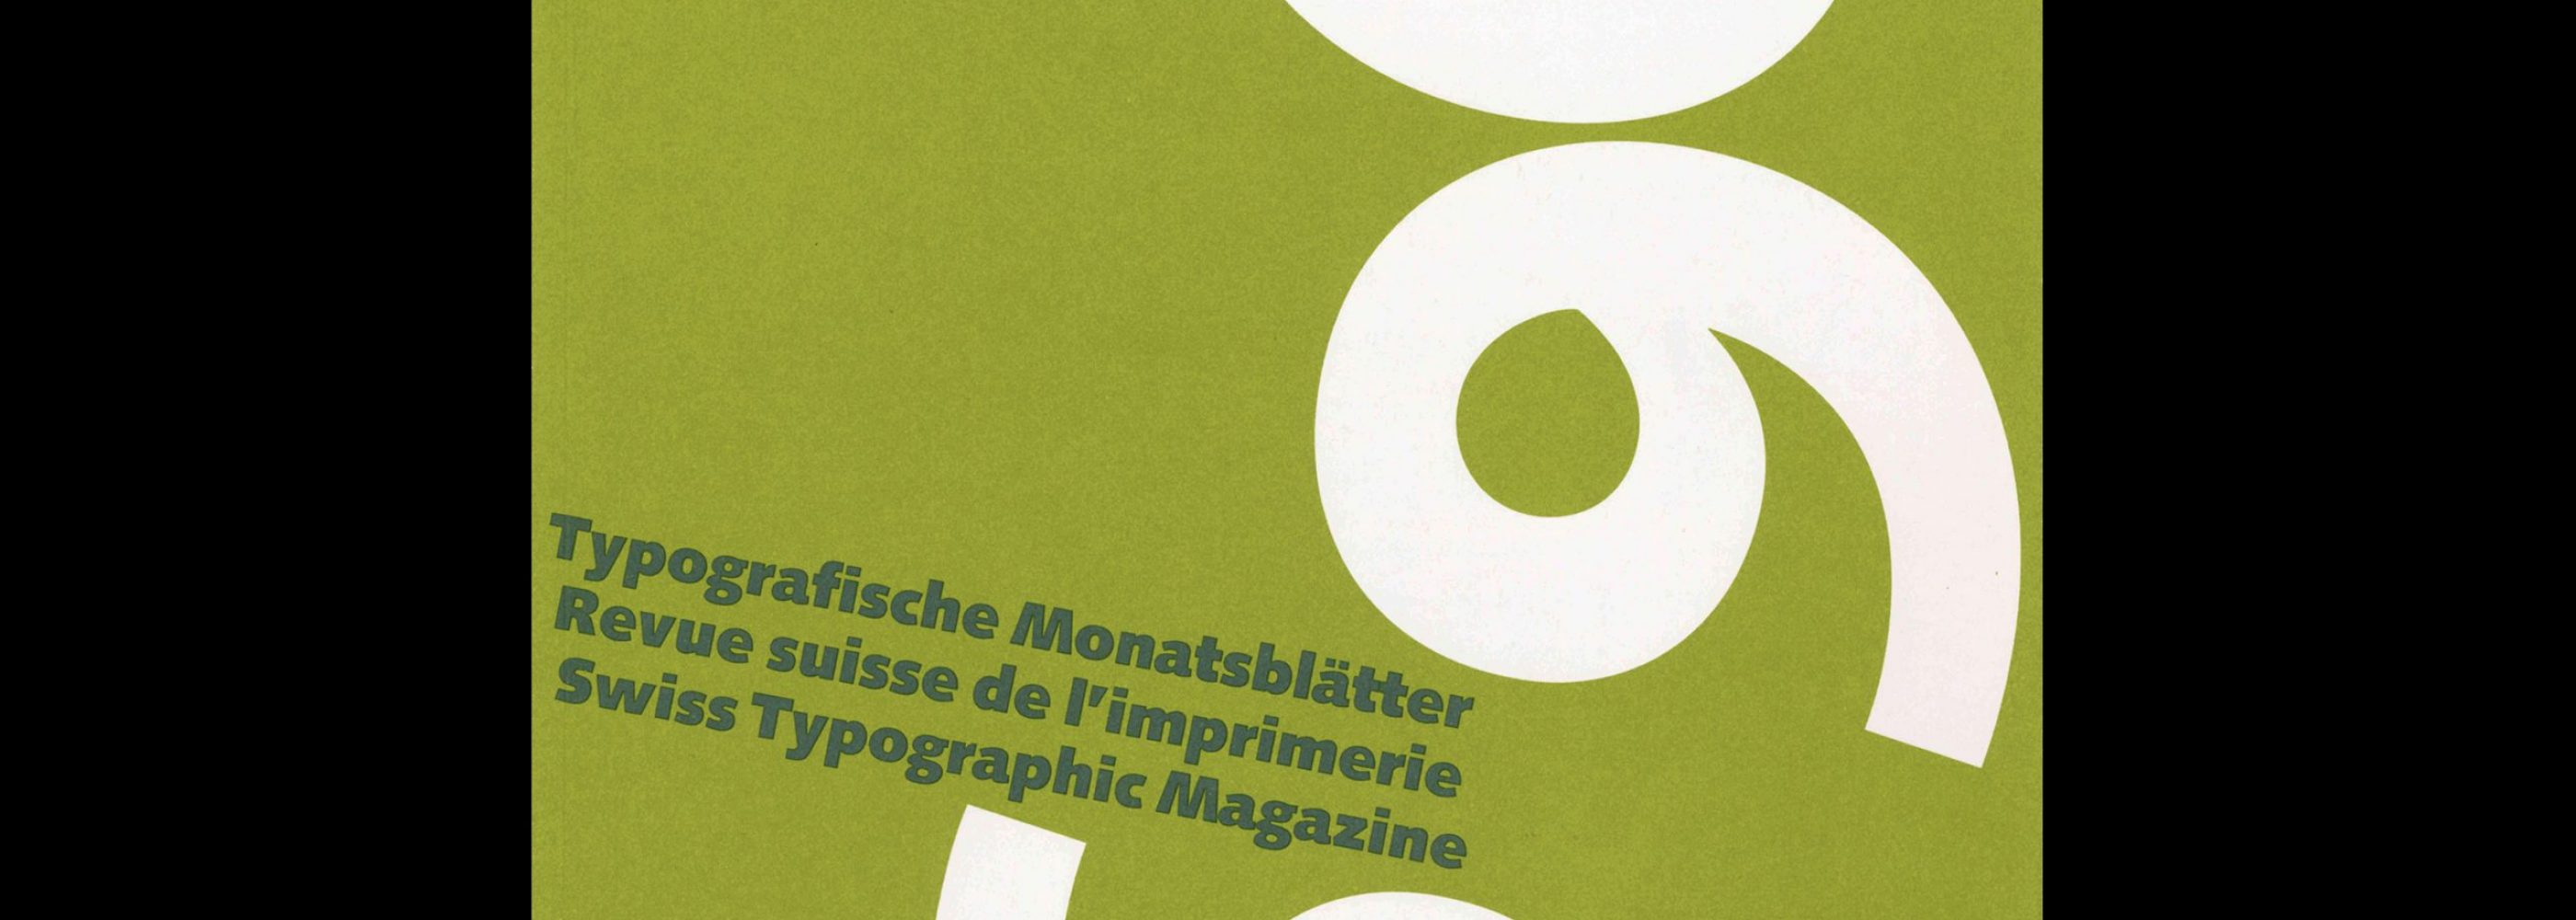 Typografische Monatsblätter, 6, 1996